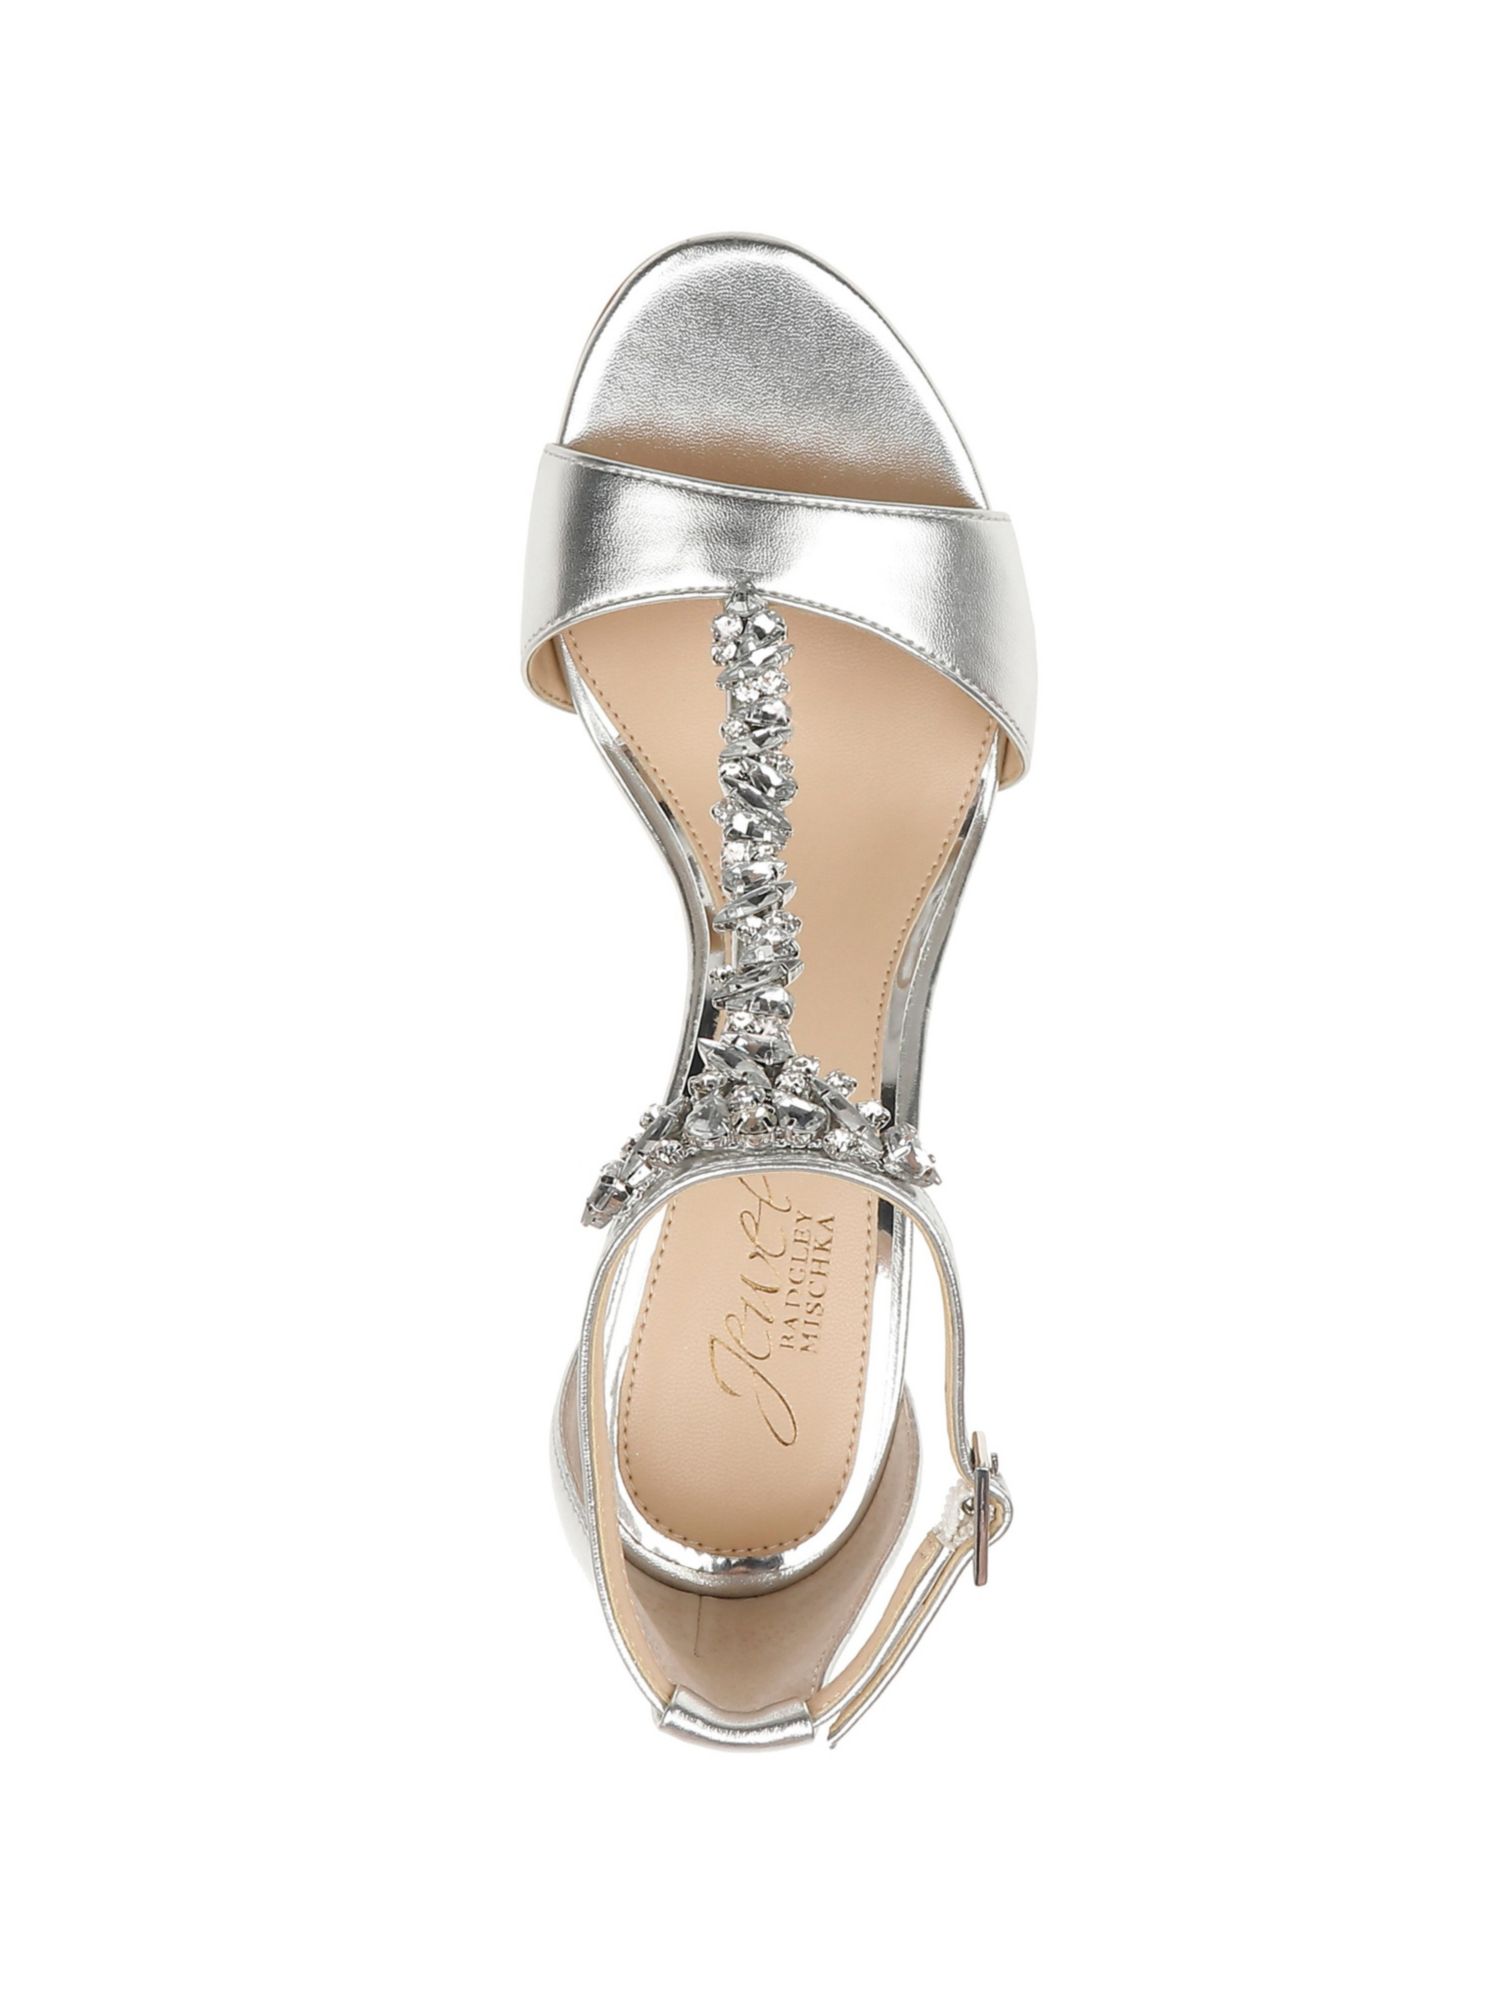 JEWEL BADGLEY MISCHKA Womens Silver Studded T-Strap 800554922892 Almond Toe Block Heel Buckle Dress Heels Shoes 7.5